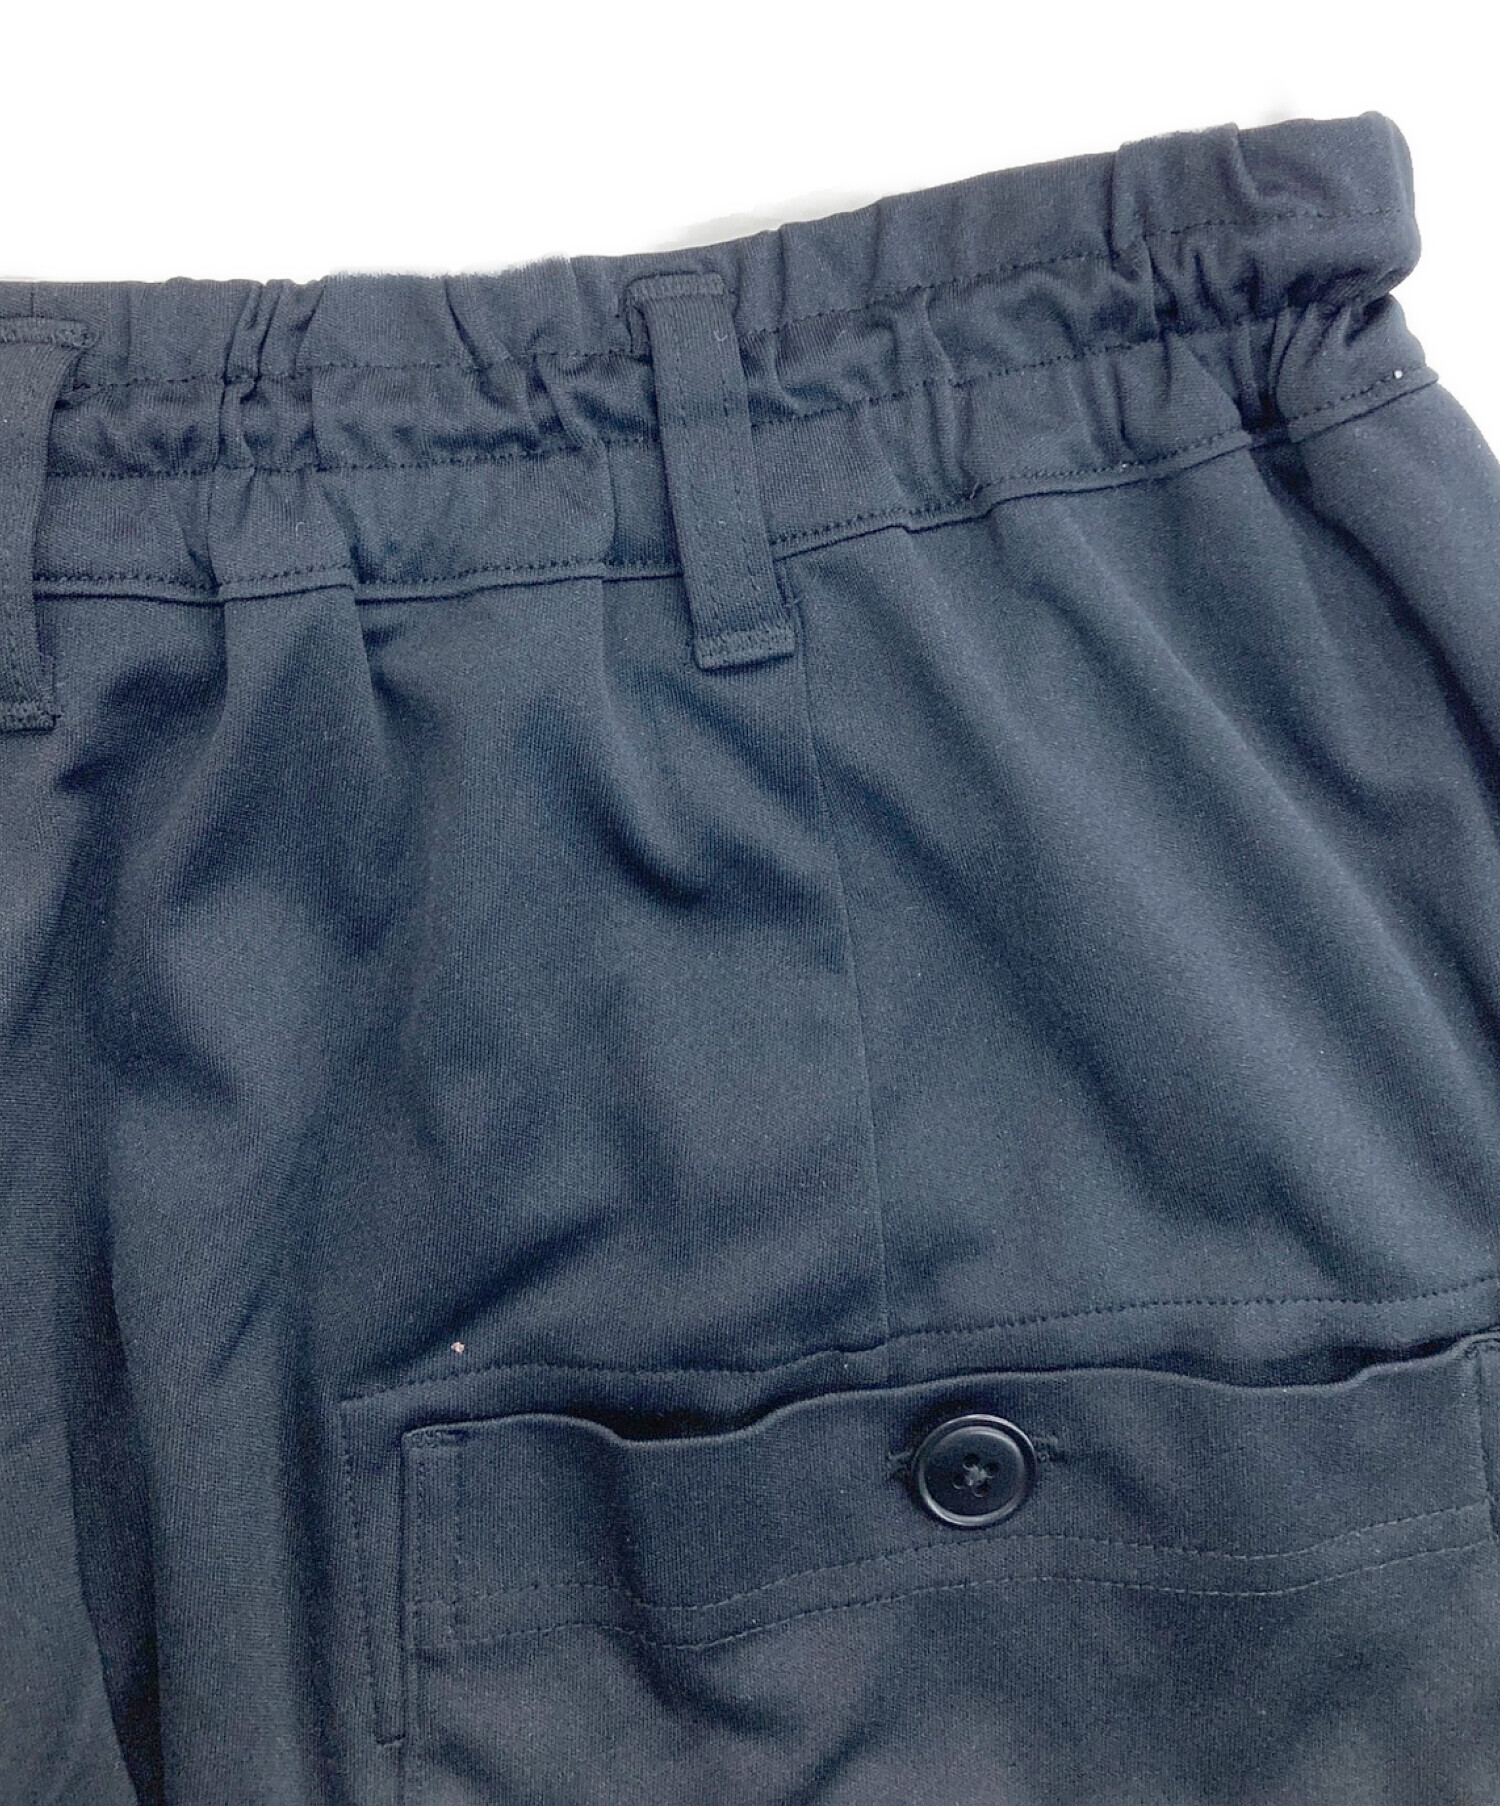 s'yte (サイト) 6 quarter length Pants ブラック サイズ:3(L)